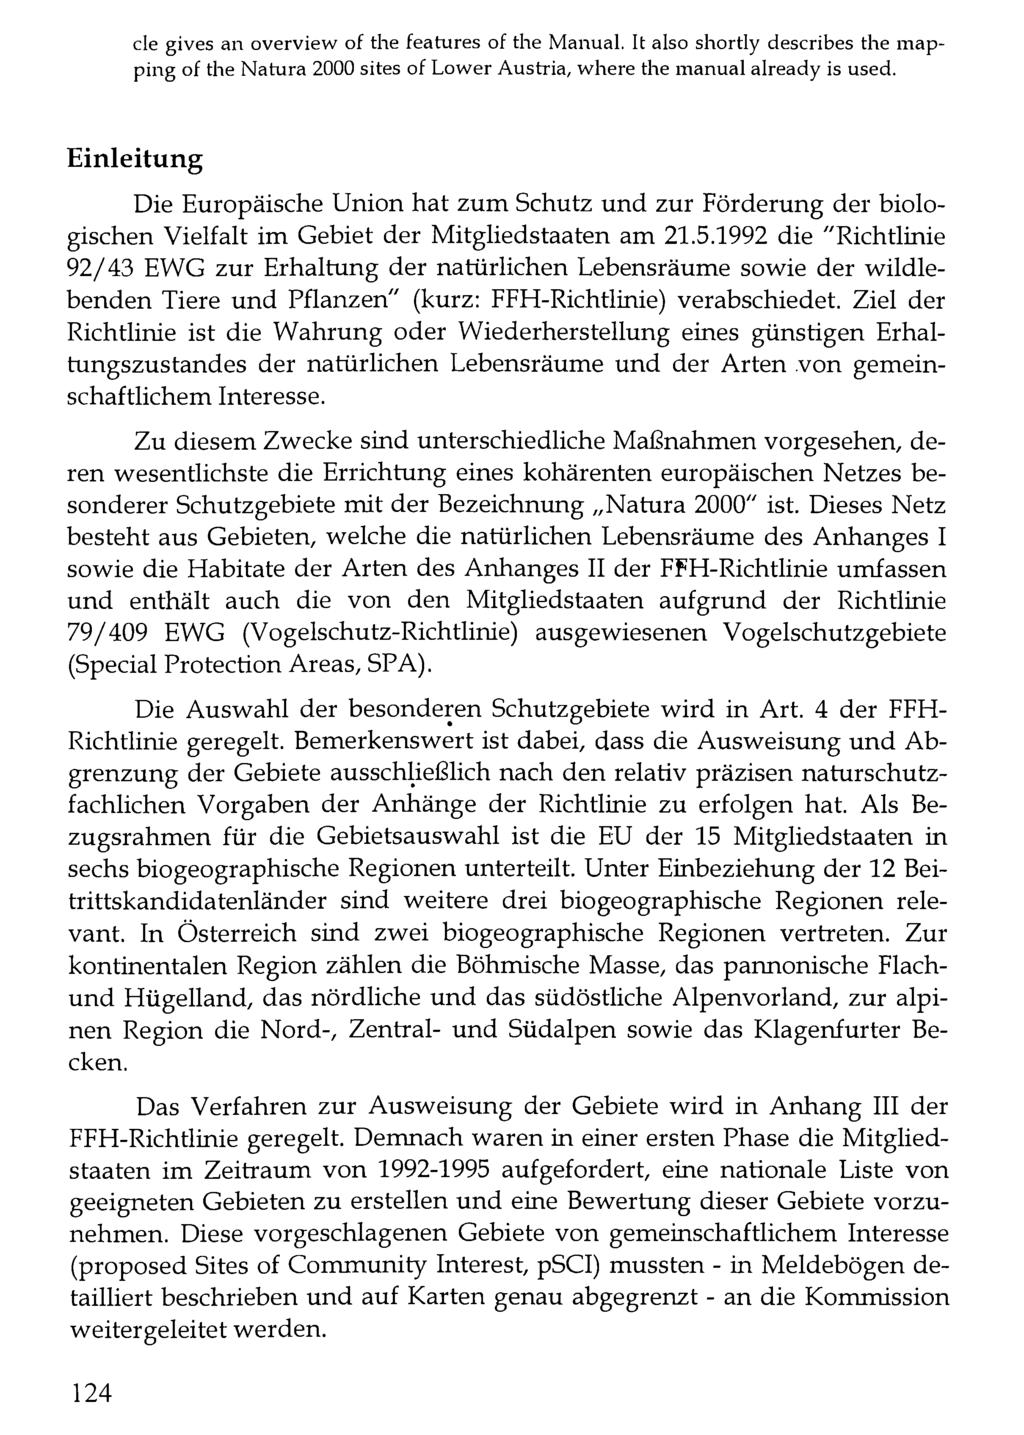 cle gives an Verlag overview Alexander of Just: the Dorfbeuern features - Salzburg of - the Brüssel; Manual. download unter It also www.biologiezentrum.